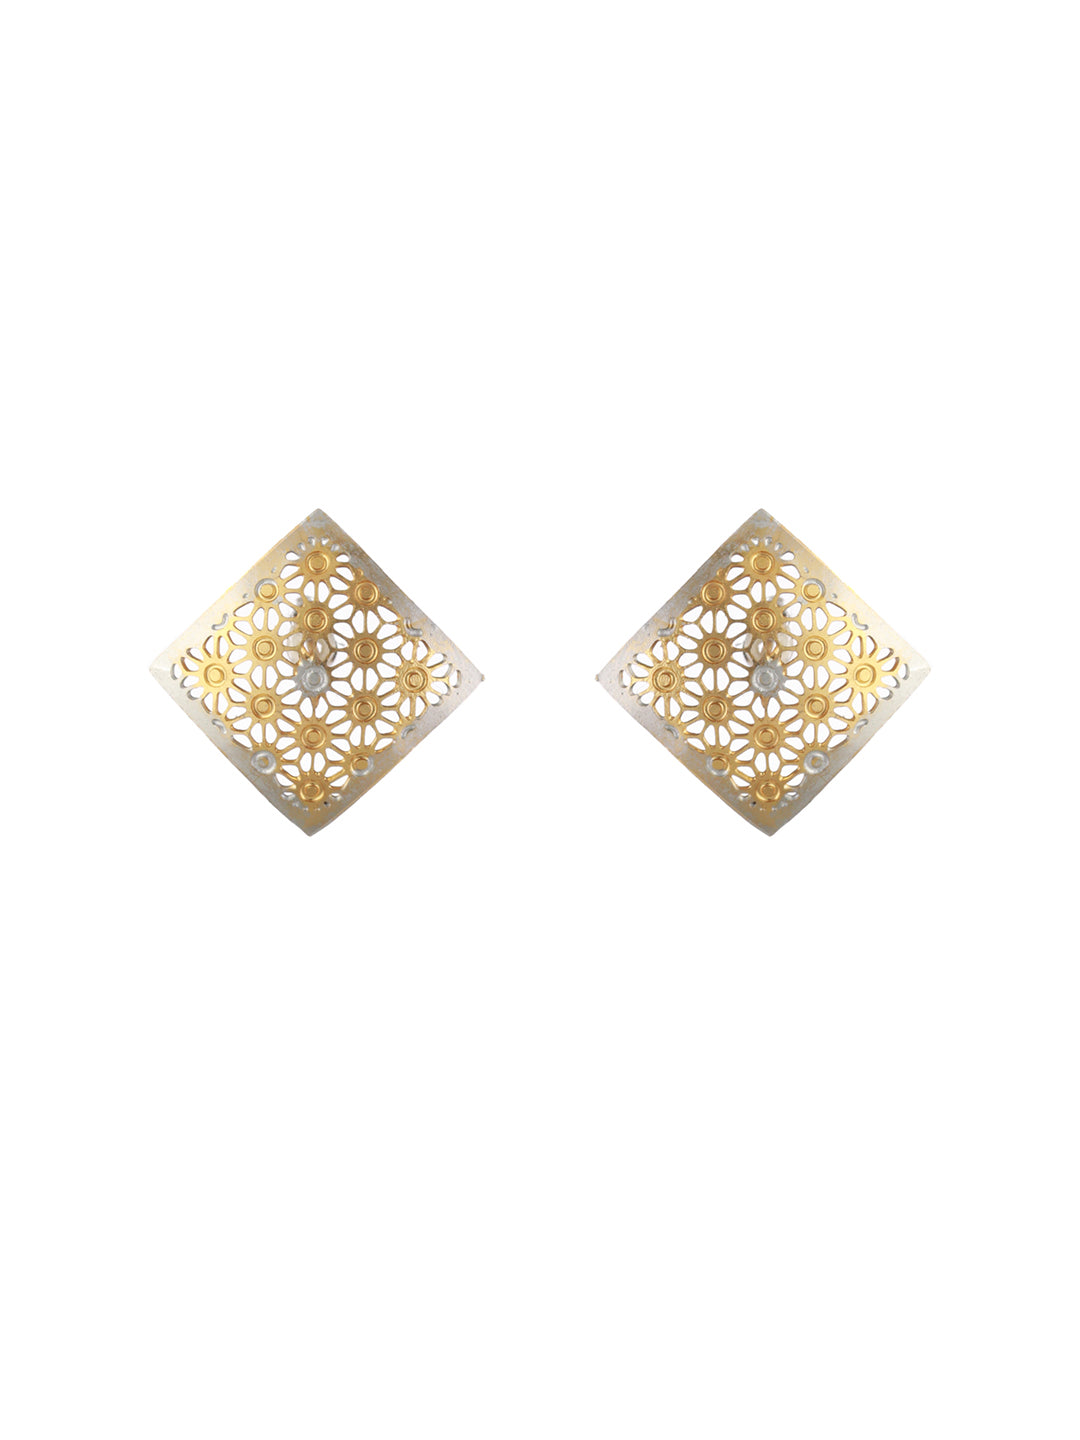 Priyaasi Geometric Cutwork Silver Gold-Plated Jewellery Set